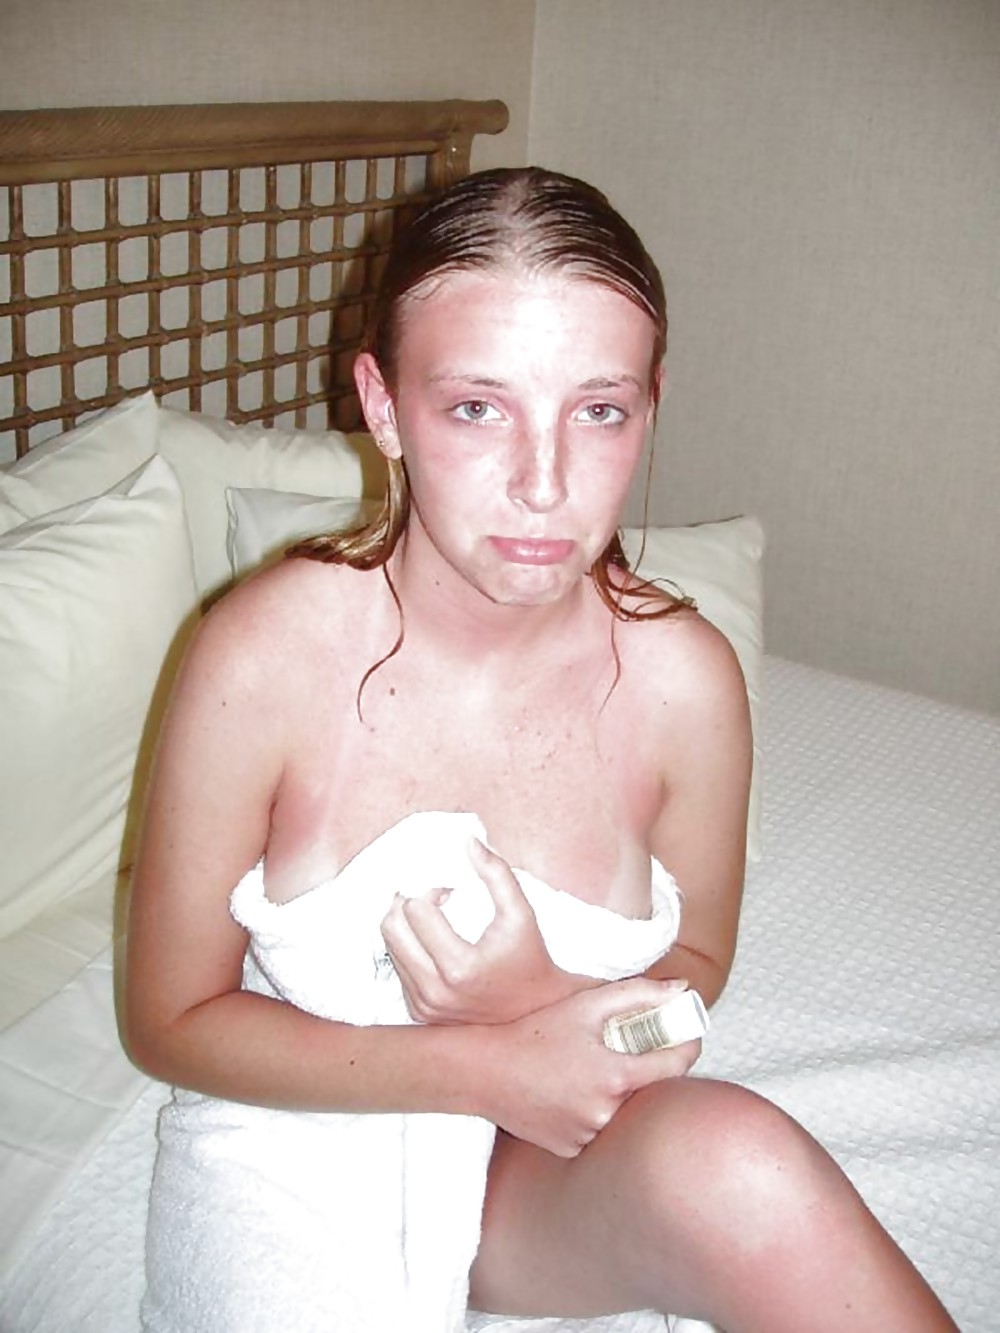 Free Embarrassed Nude Girls 14 photos